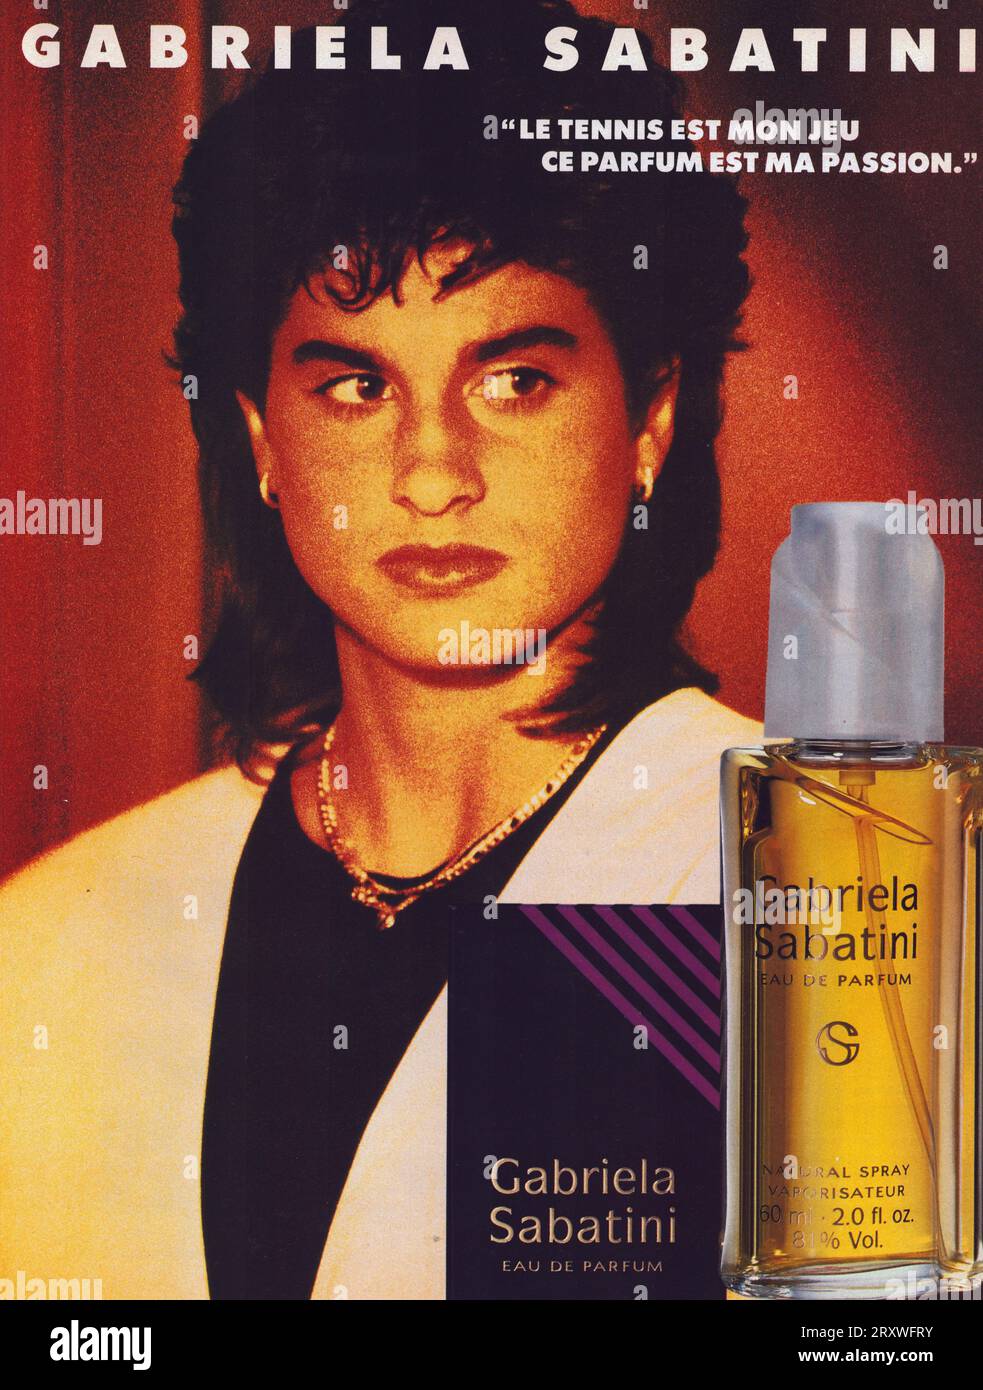 Gabriela Sabatini perfume vintage magazine commercial Gabriela Sabatini perfume bottle Gabriela Sabatini retro advertisement Stock Photo